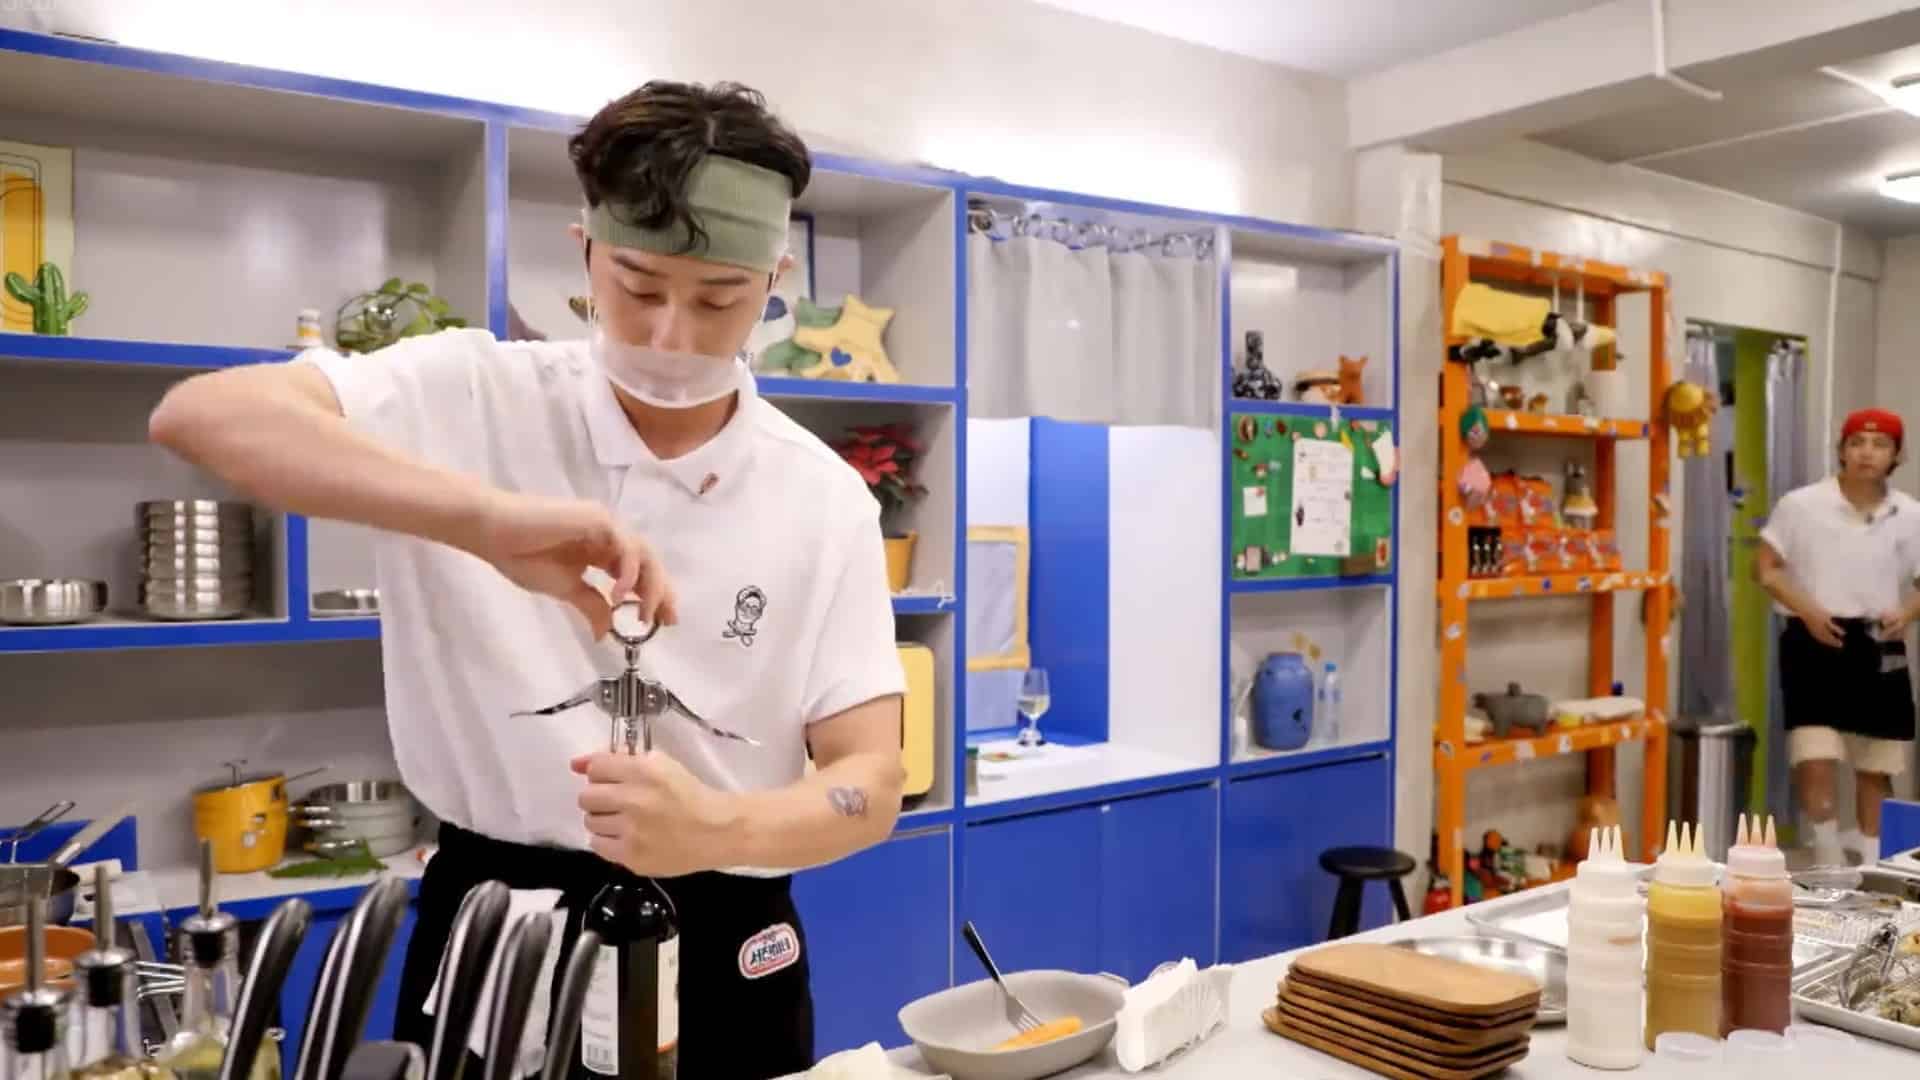 Jinny’s Kitchen Episode 7 Release Date